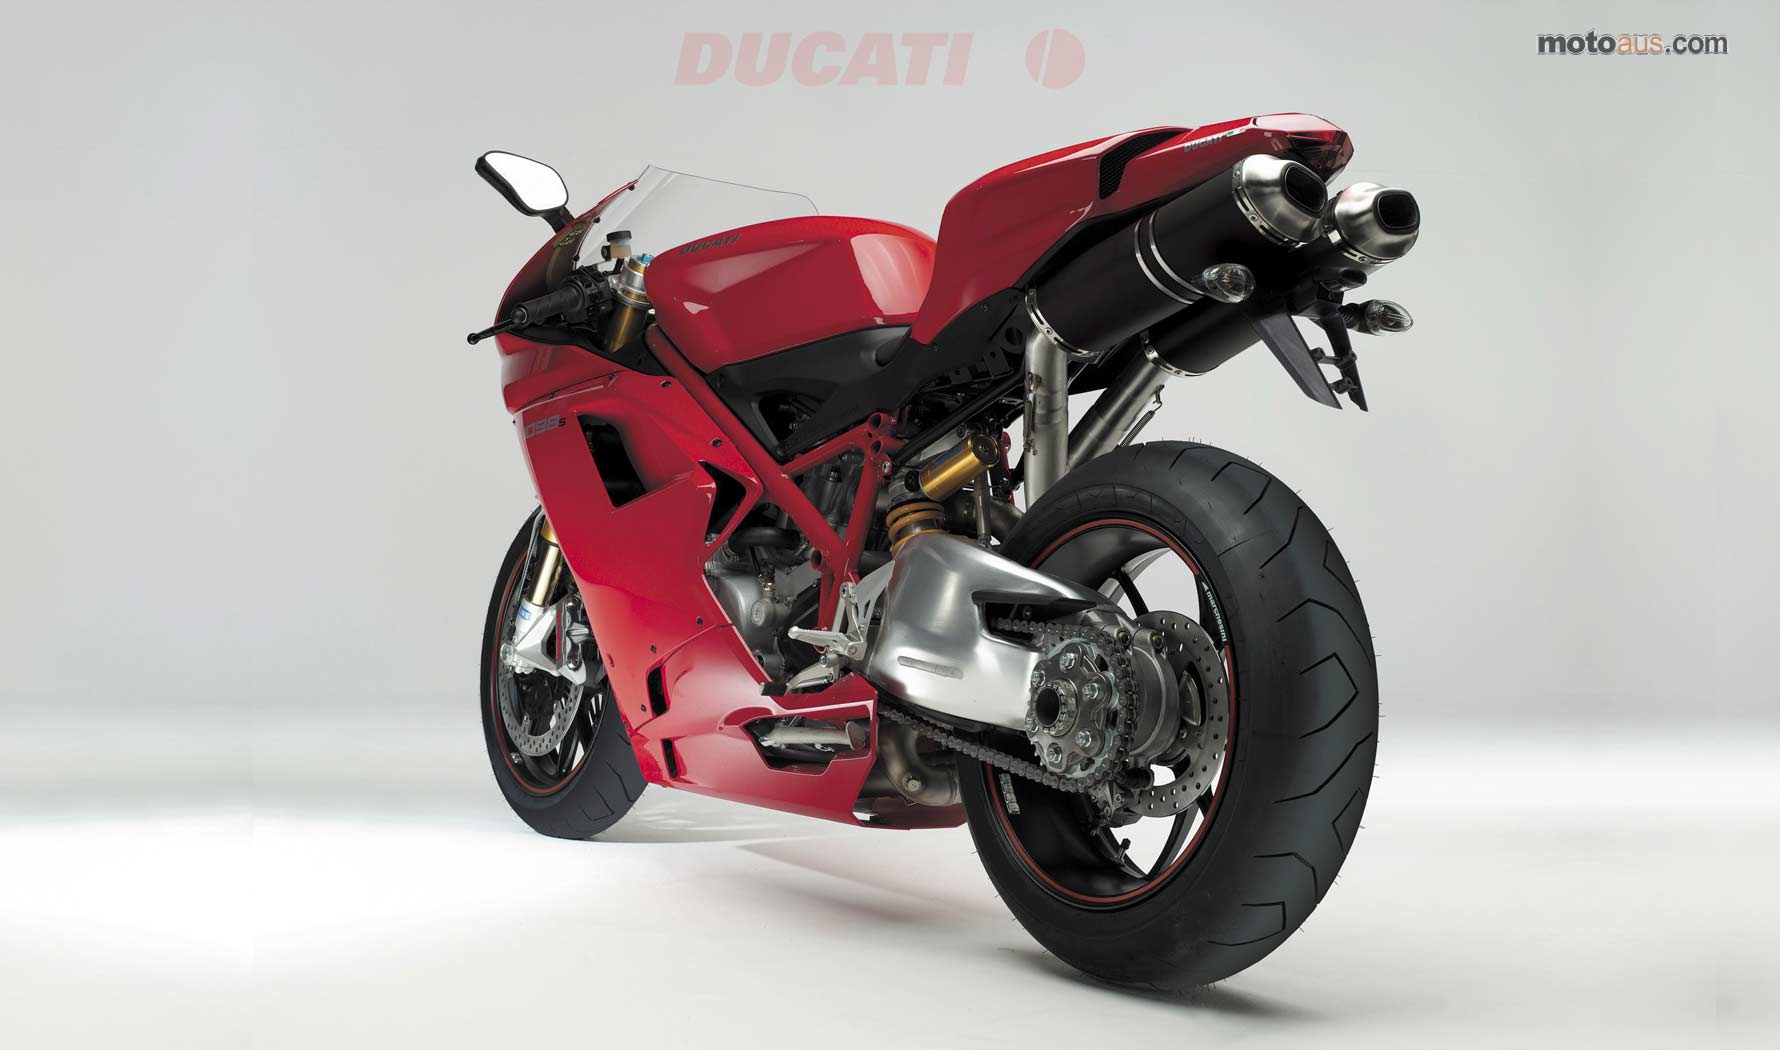 Ducati X Wide Screen Wallpaper Image